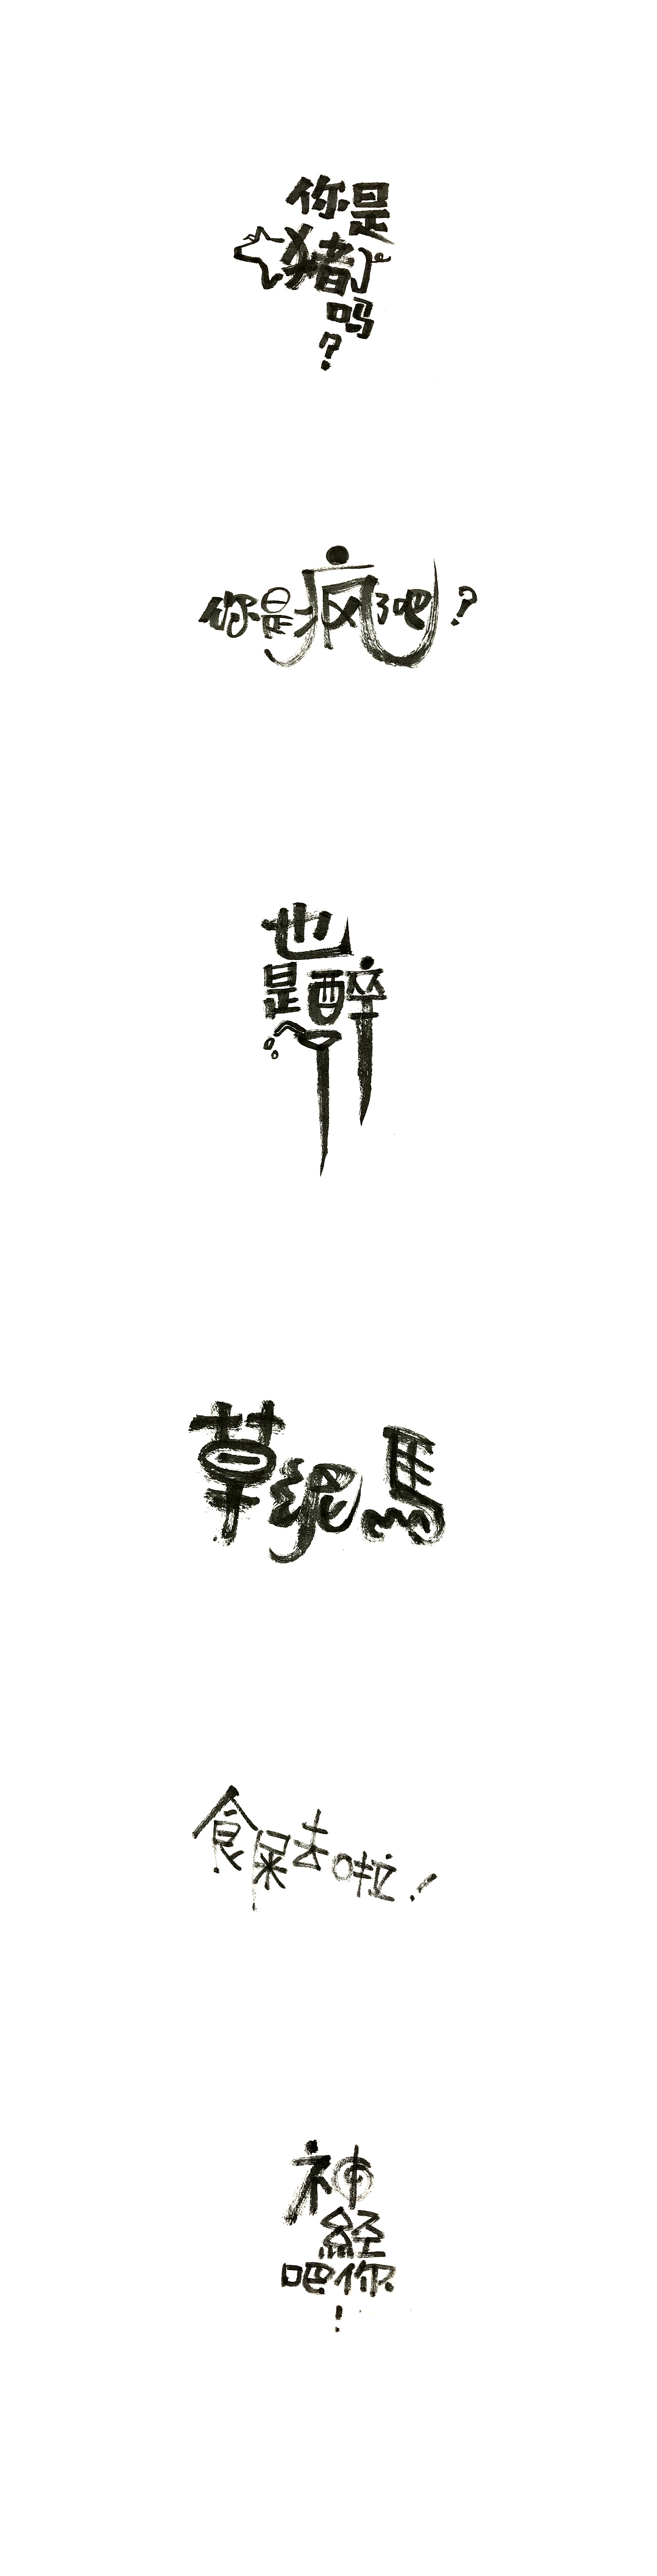 6P Interesting Chinese style slogan! Font doodle design.